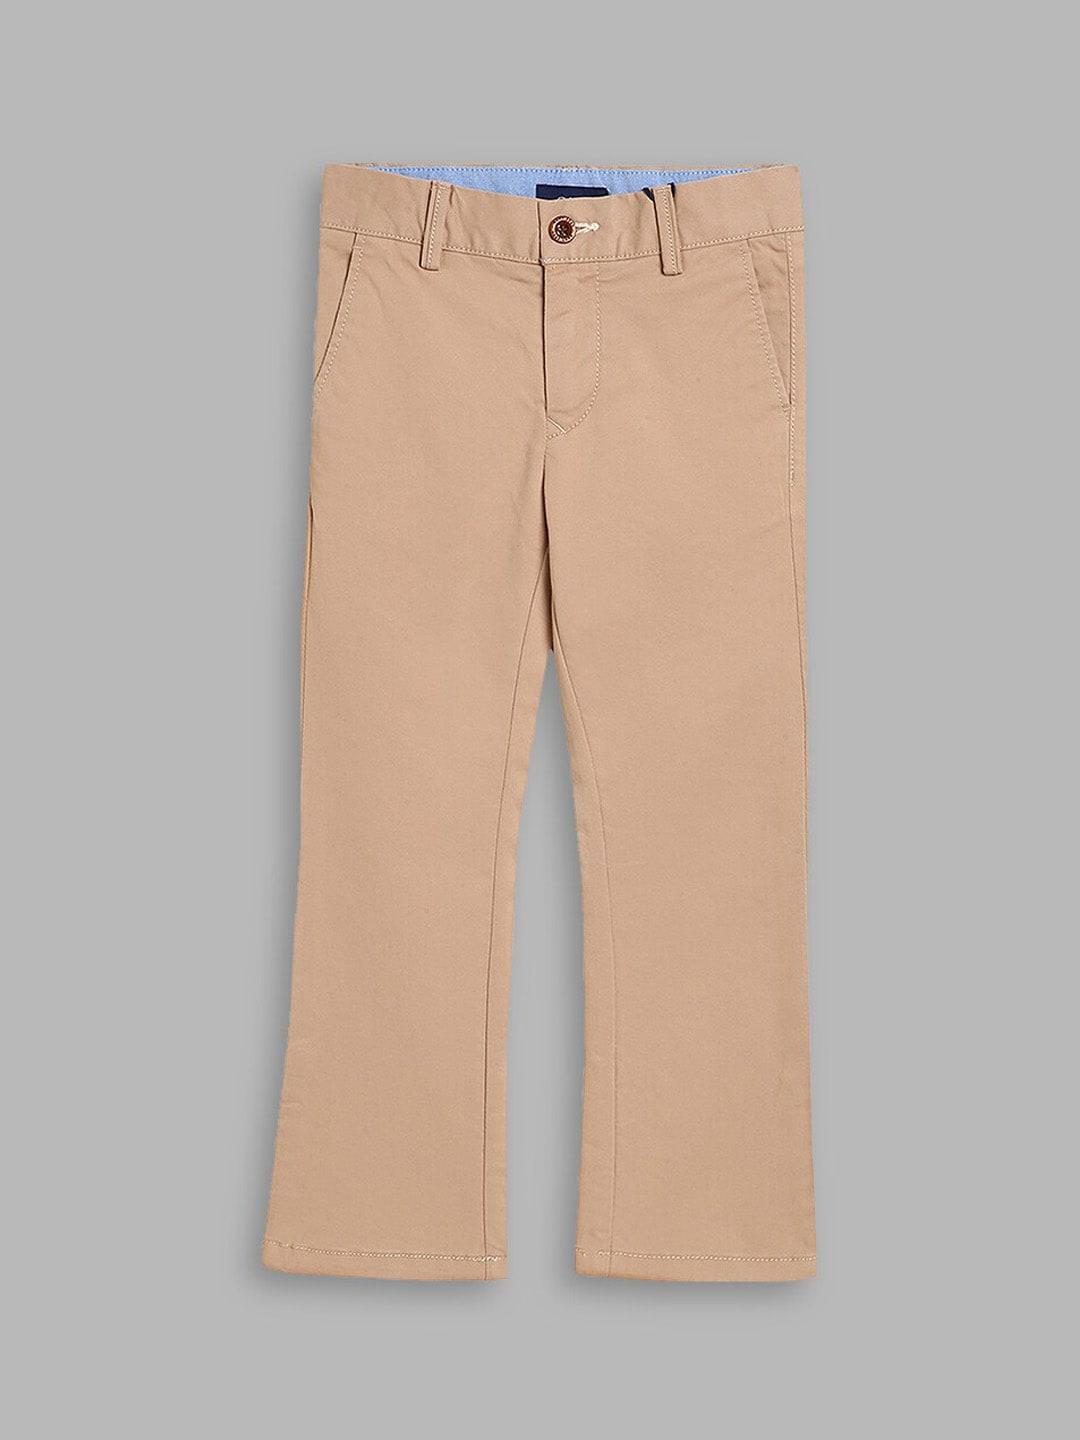 GANT Boys Brown Cotton Trousers